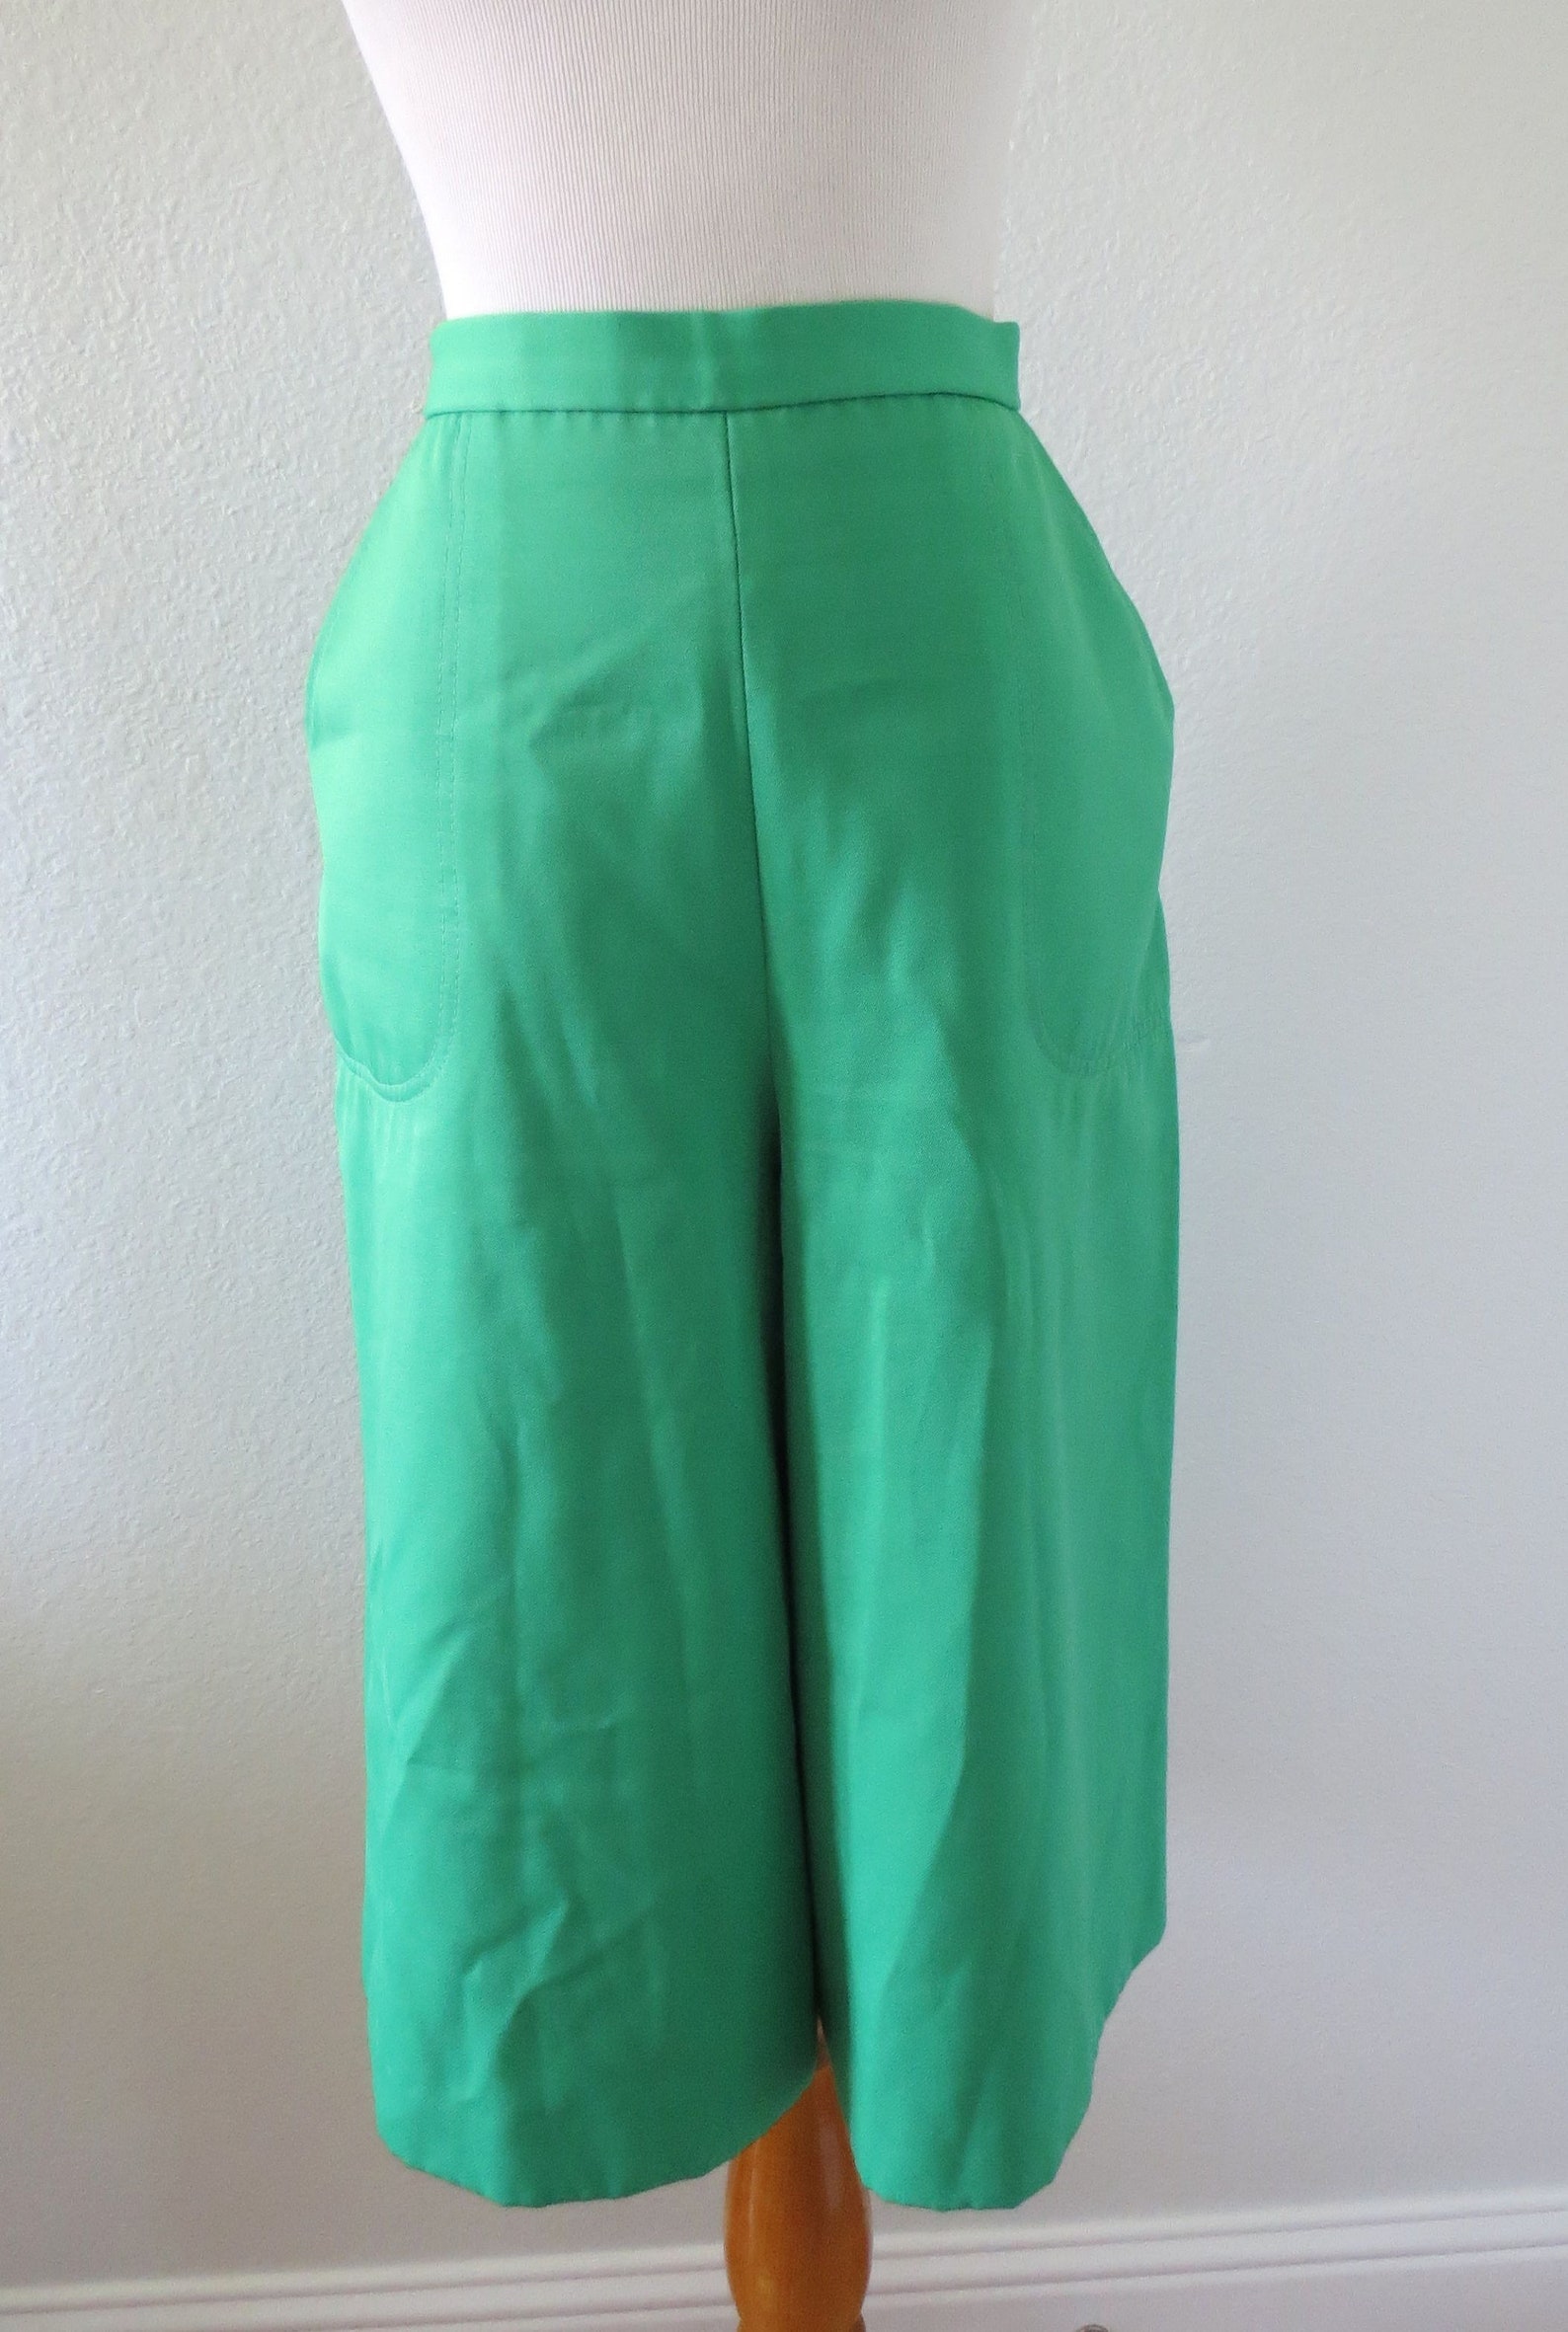 Vintage Culottes 70s Mod Cropped Pants | Etsy